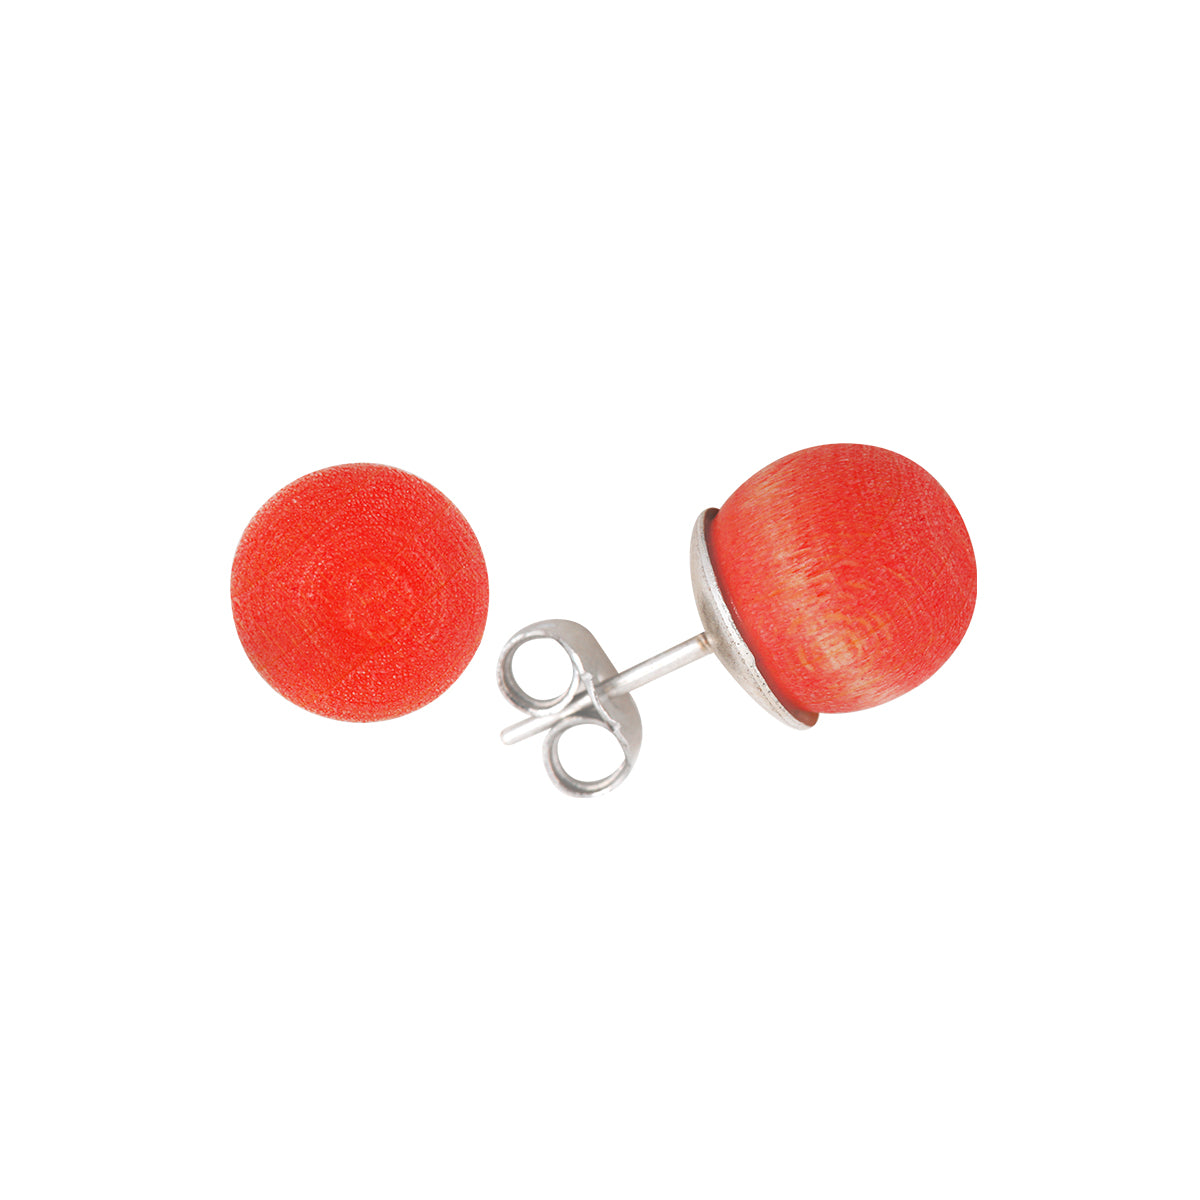 Alisa earrings, color options